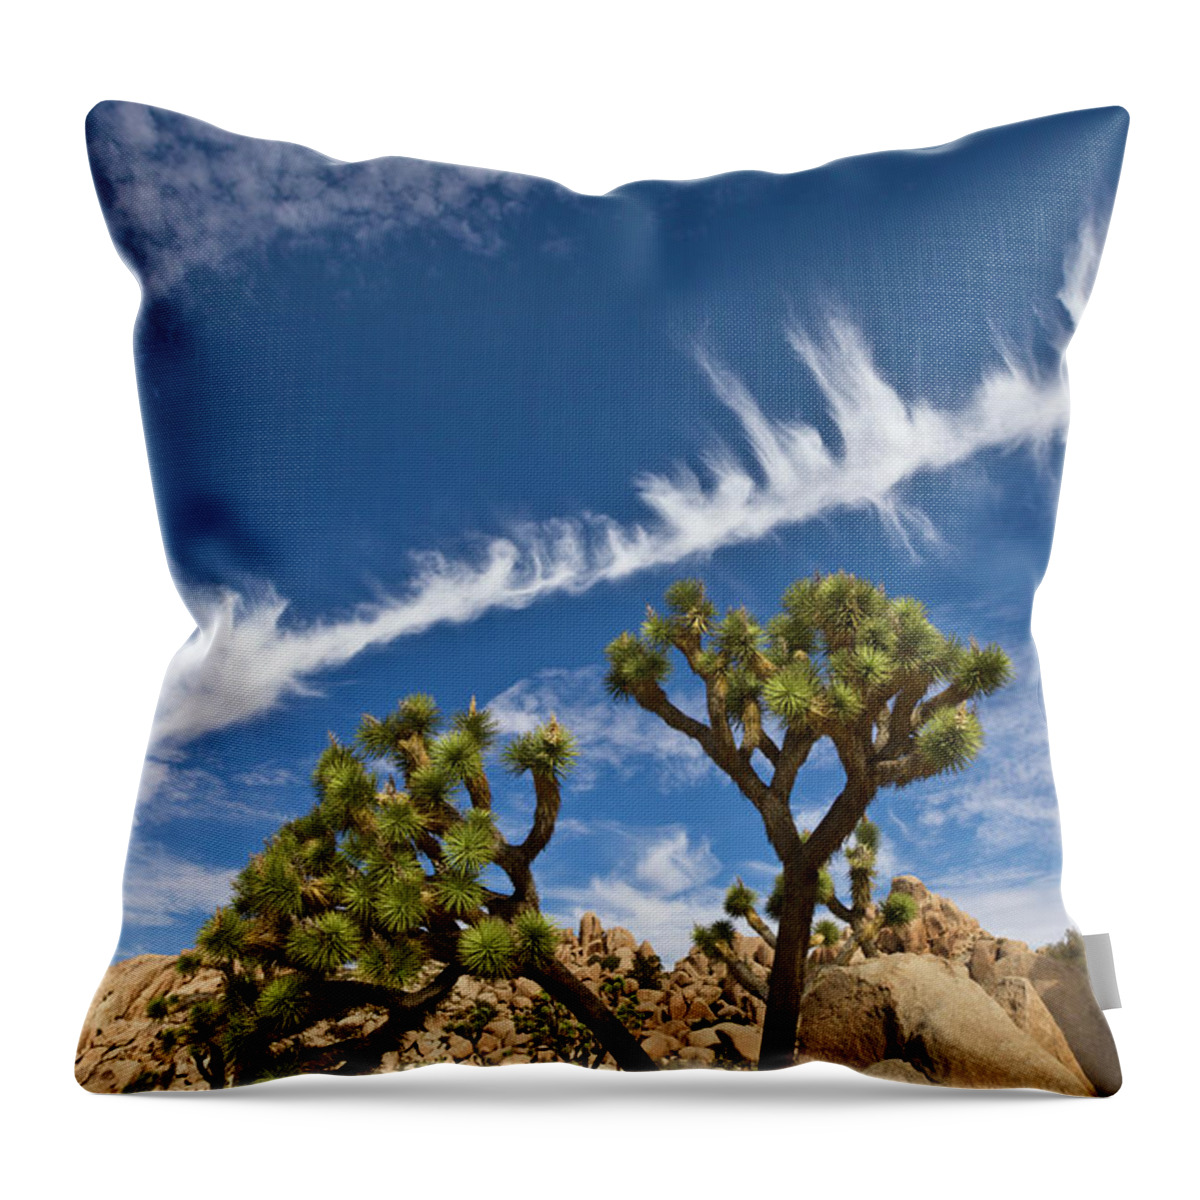 00559244 Throw Pillow featuring the photograph Joshua Trees in Joshua Tree Natl Park by Yva Momatiuk and John Eastcott